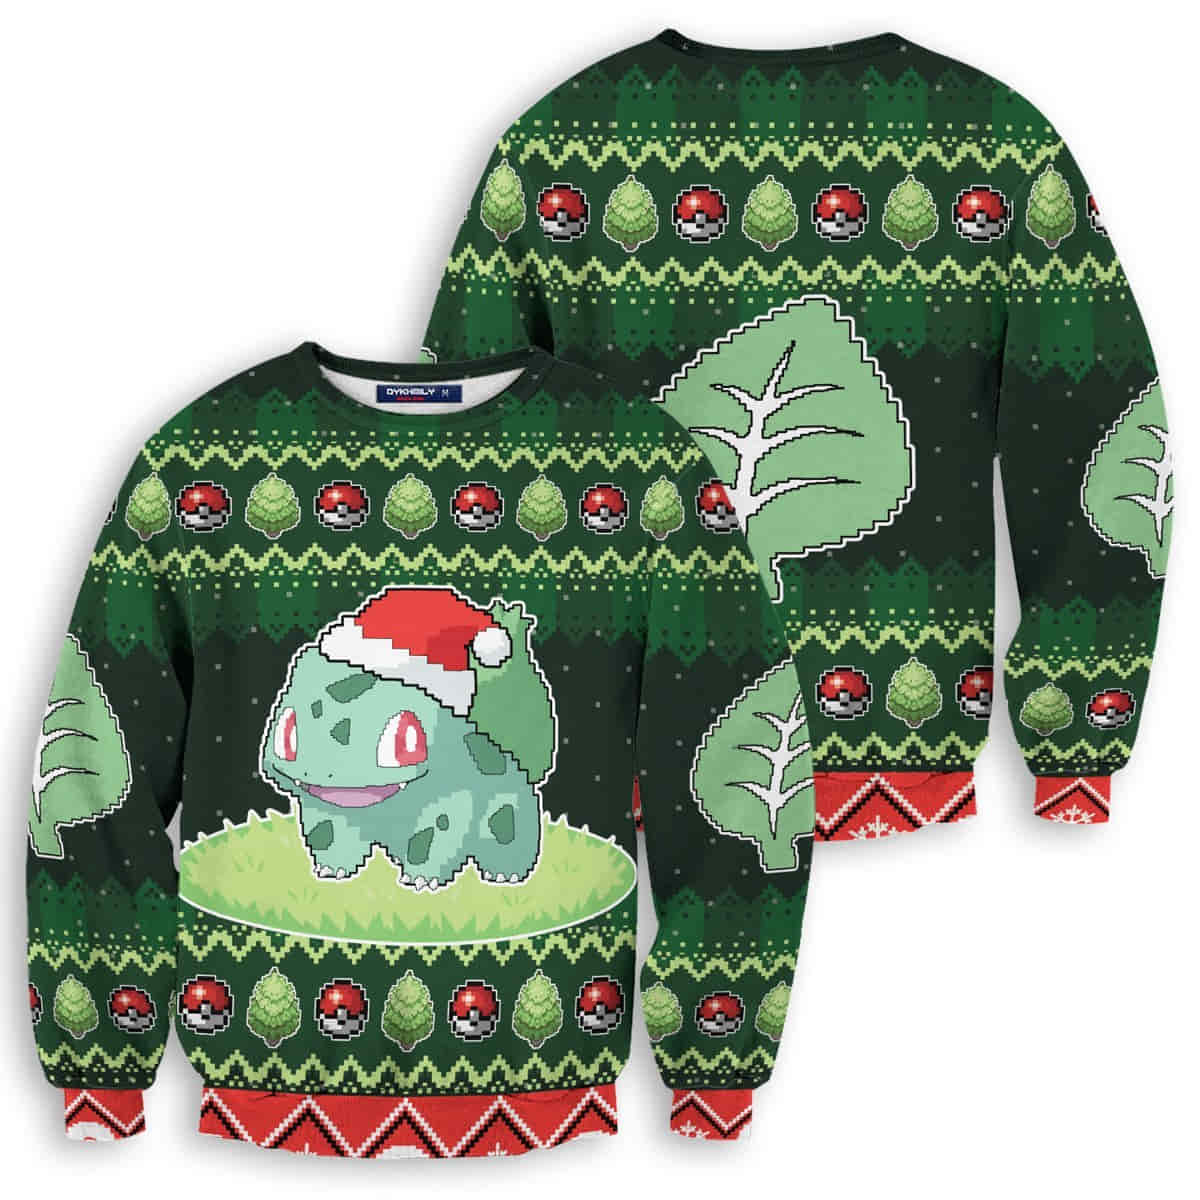 bulbasaur wool knitted sweater christmas pokemon 3d sweater 376807